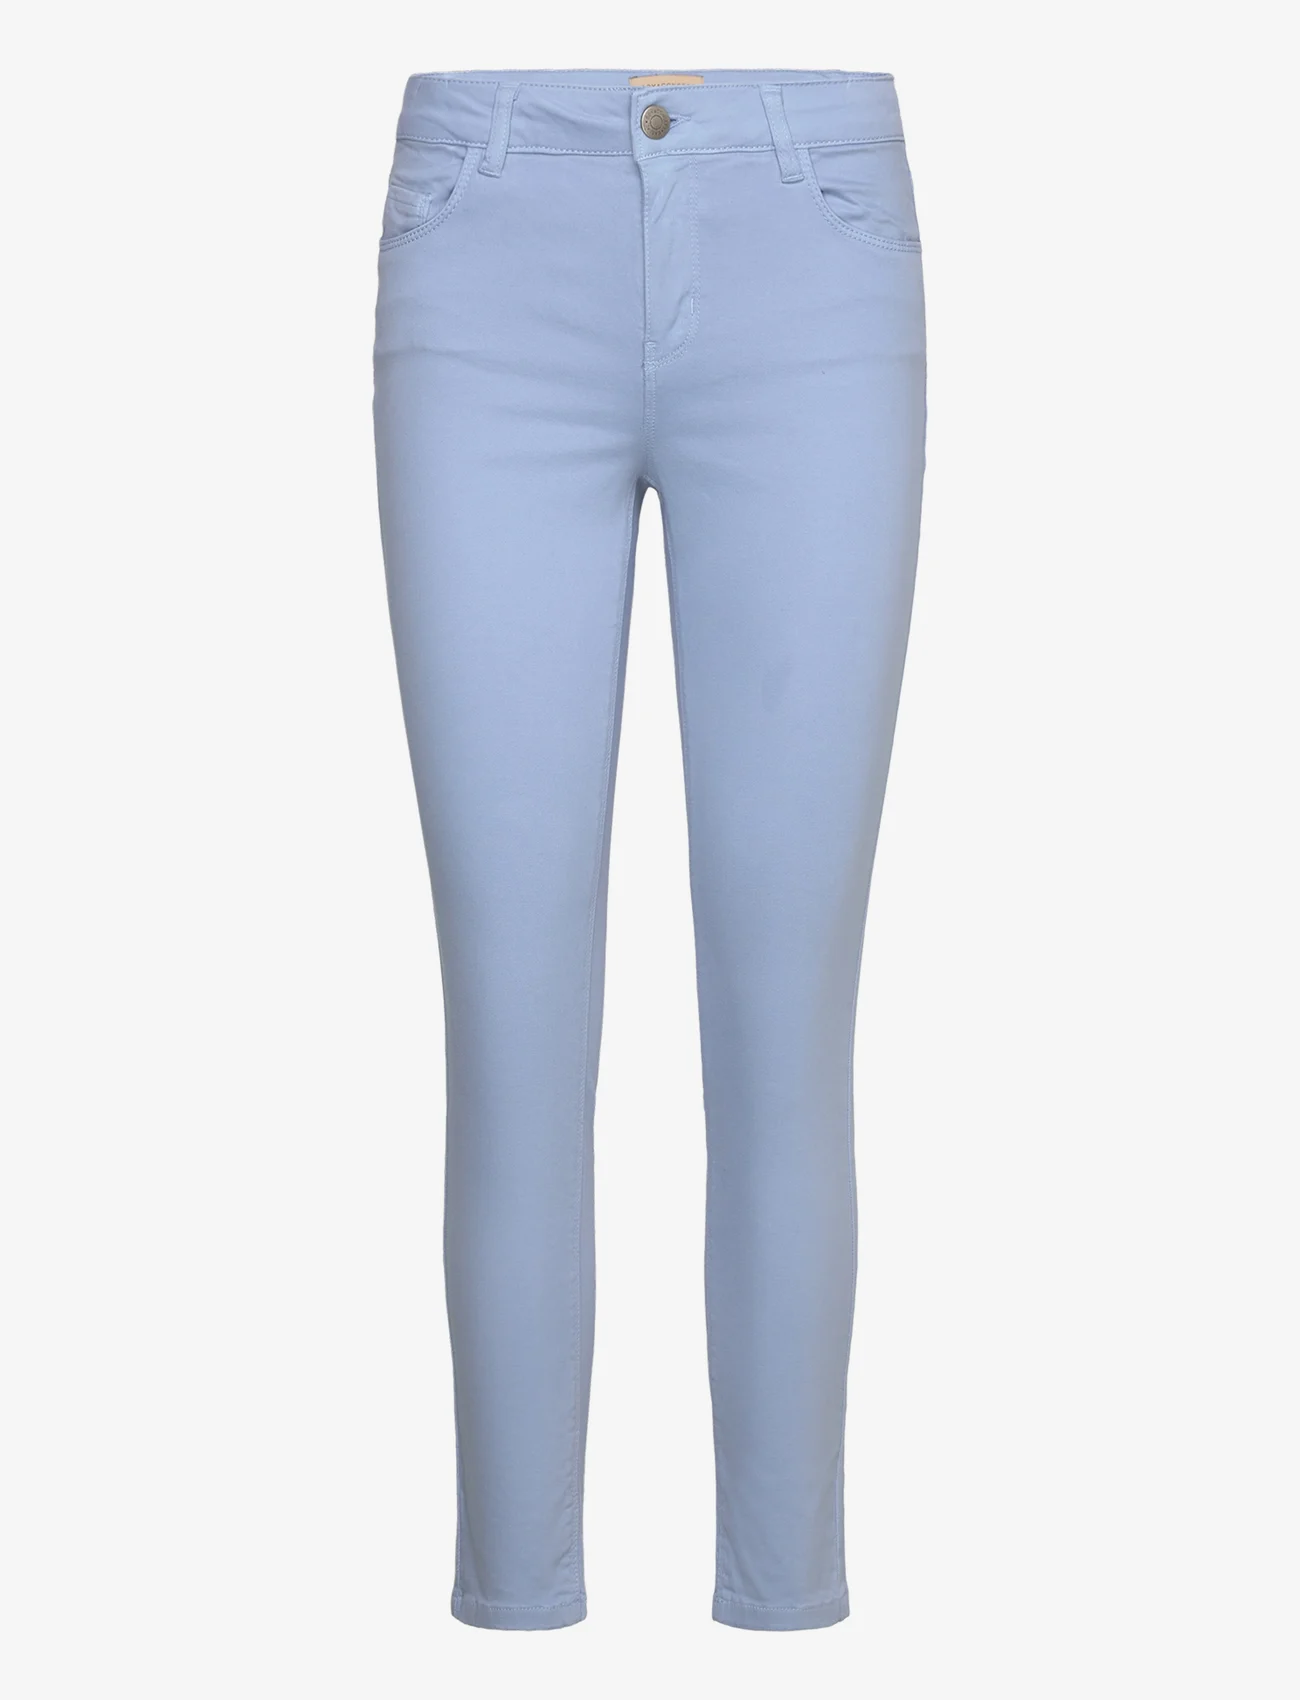 Soyaconcept - SC-ERNA PATRIZIA - slim fit jeans - crystal blue - 0